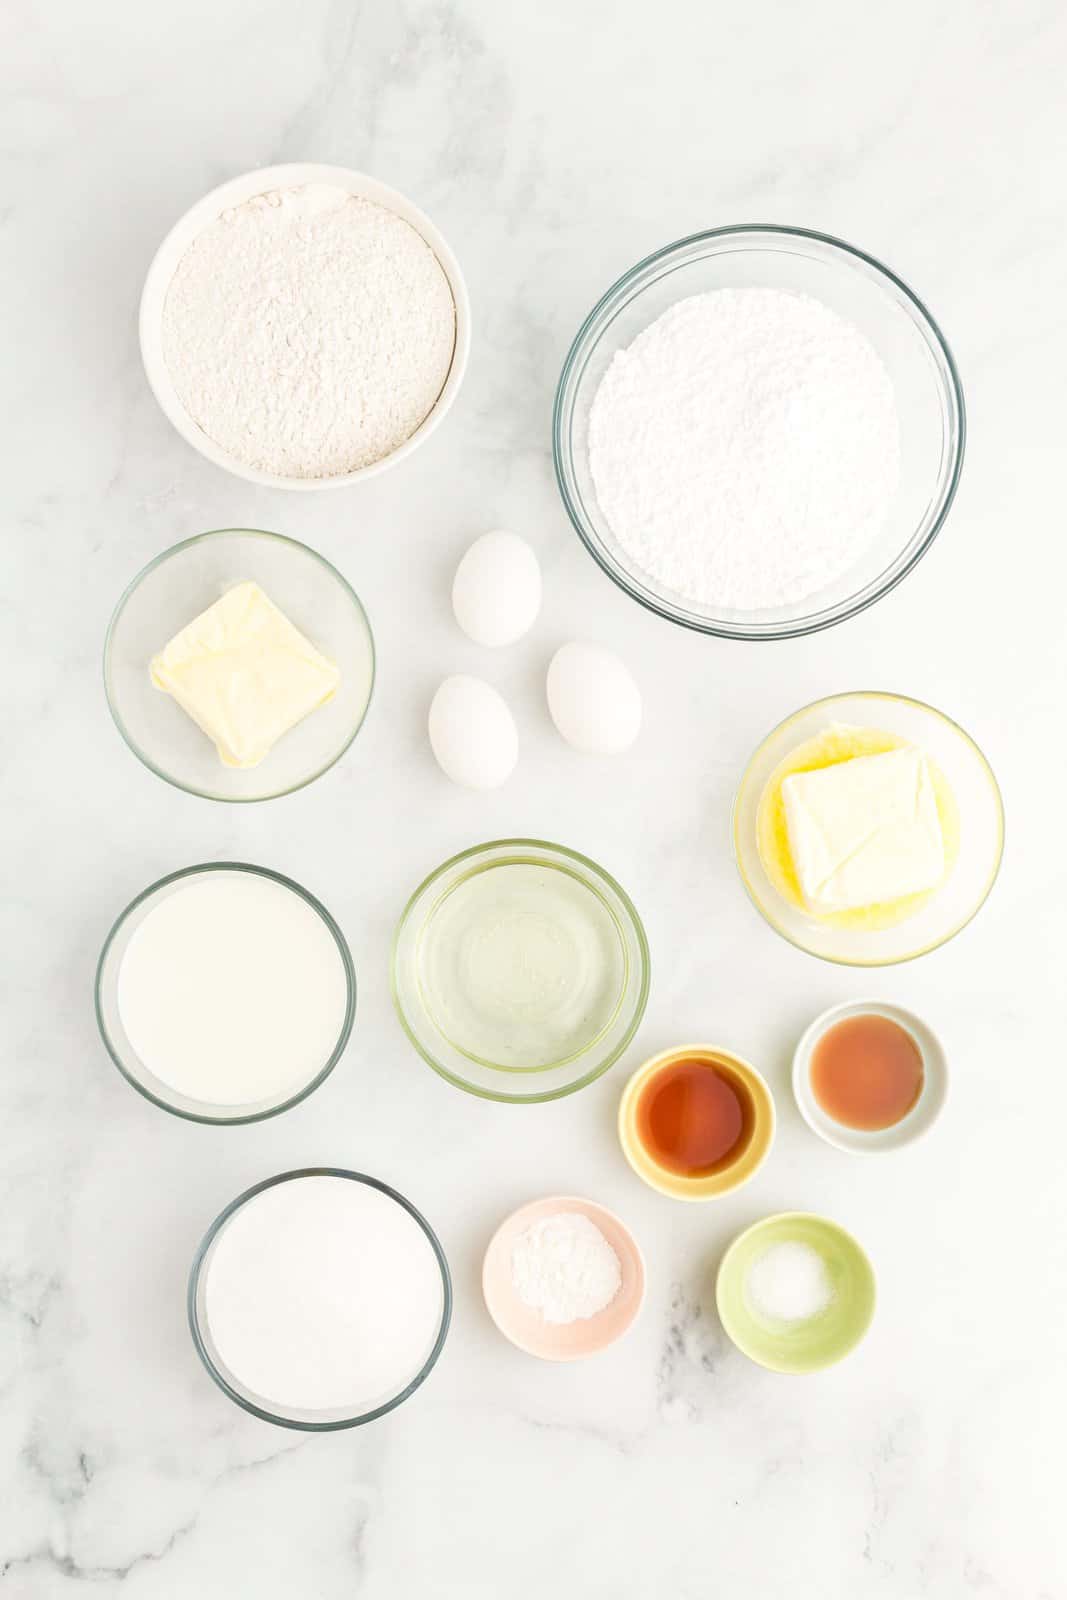 flour, baking powder, salt, unsalted butter, sugar, oil, eggs, vanilla extract, milk and powdered sugar. 